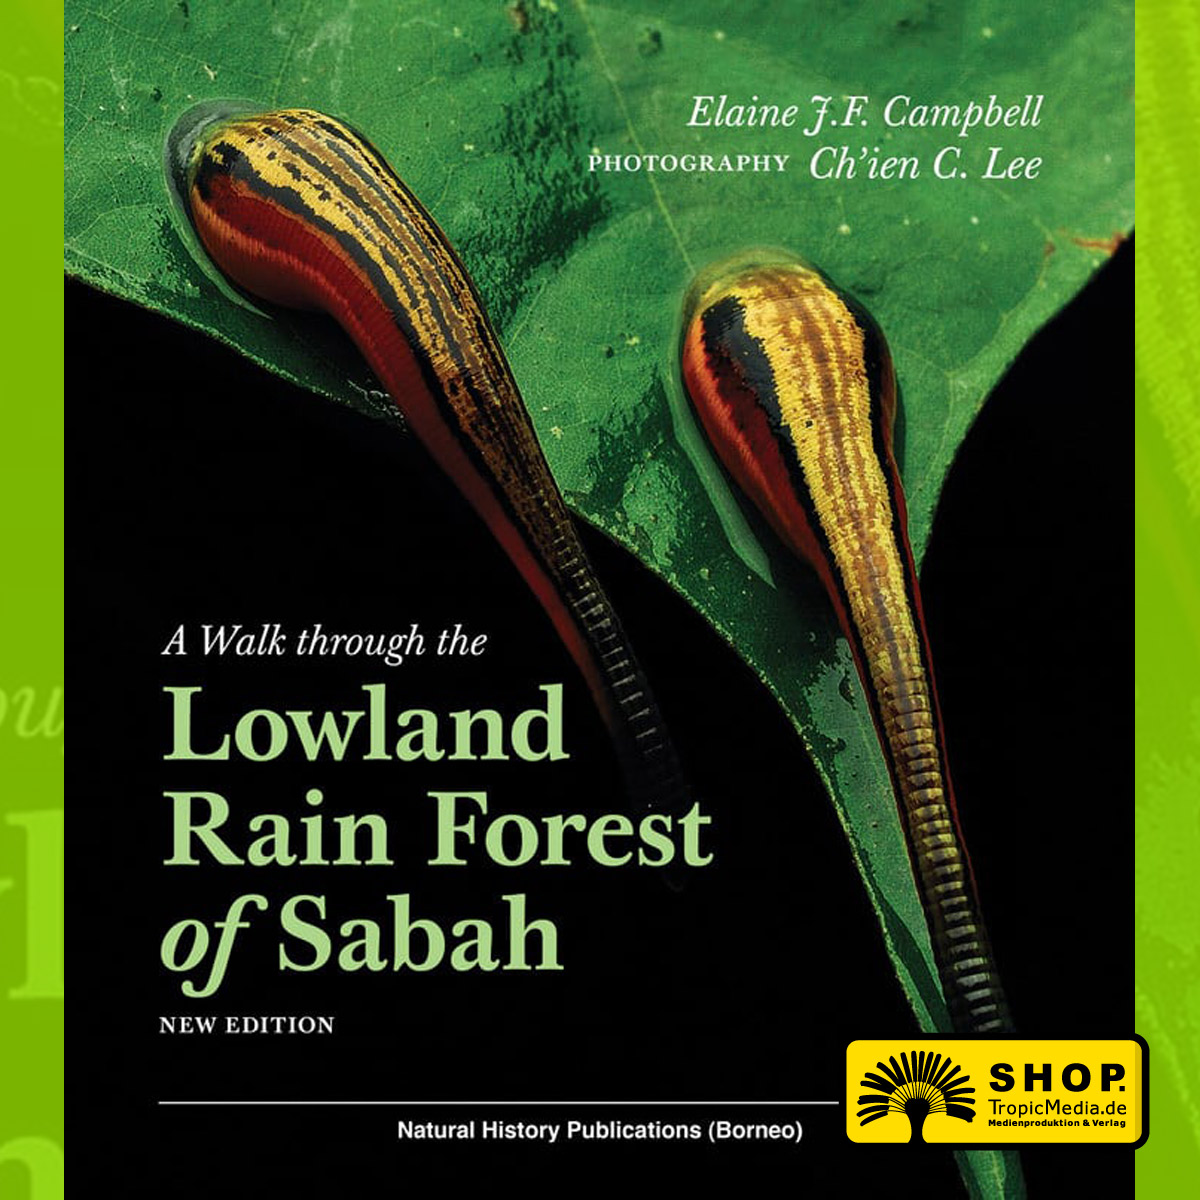 A Walk through the Lowland Rain Forest of Sabah (Elaine J.F. Campbell)